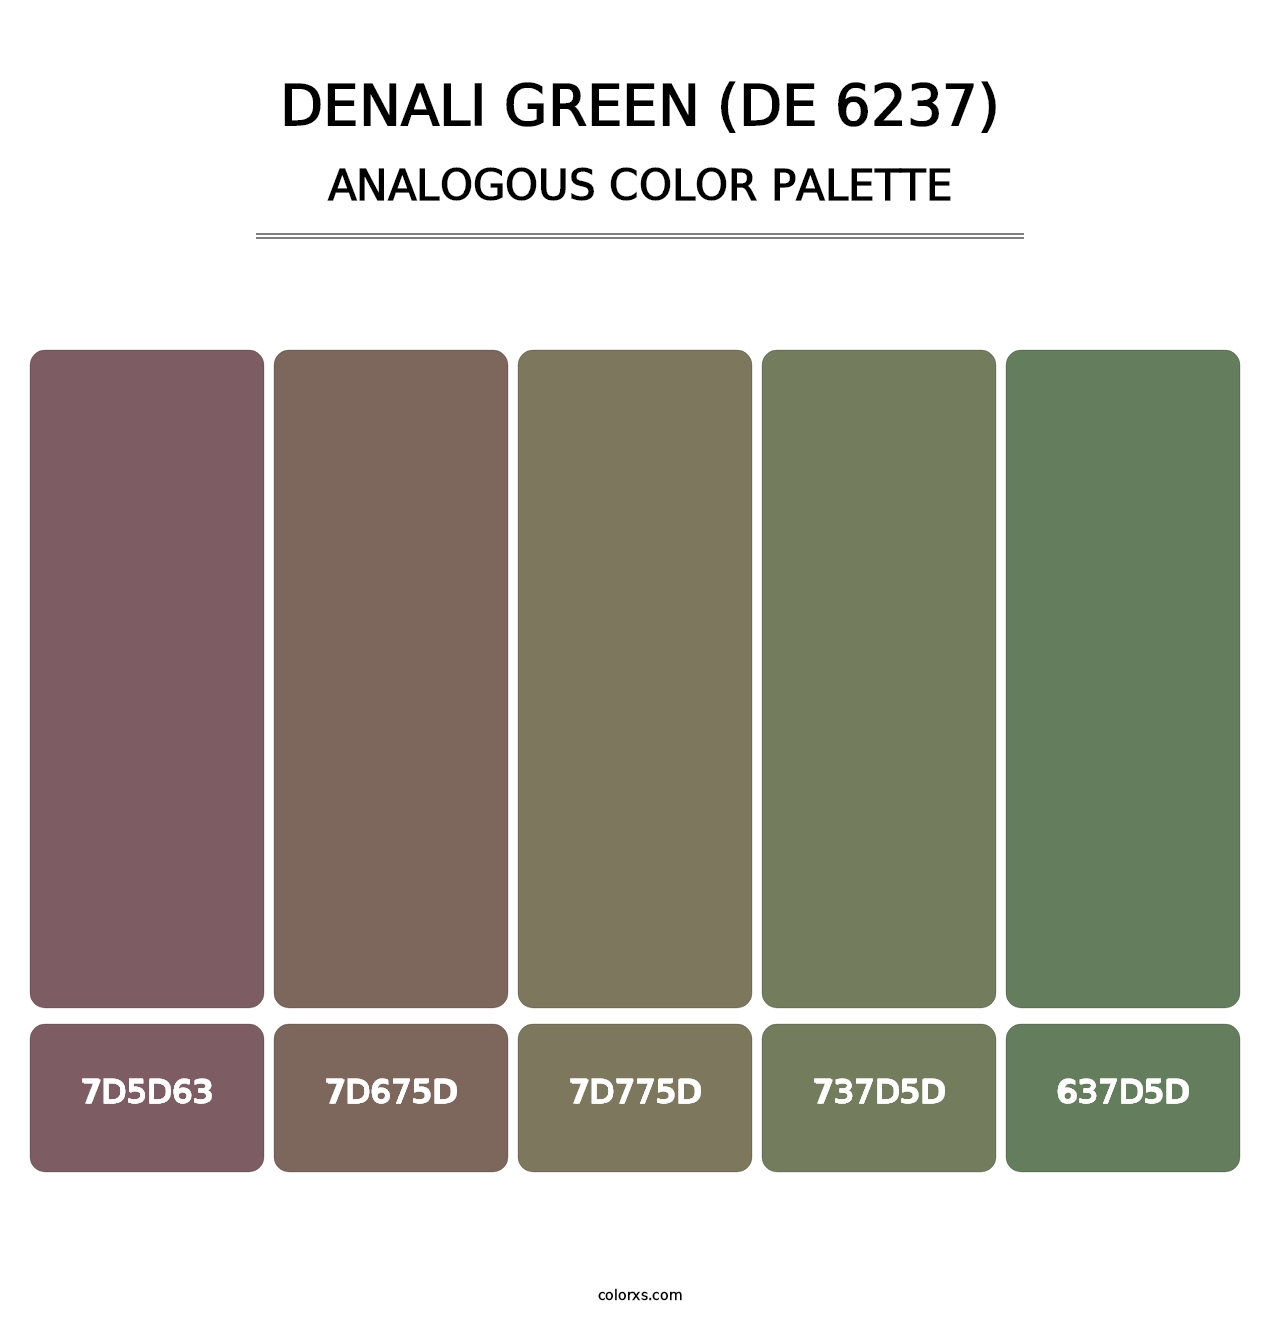 Denali Green (DE 6237) - Analogous Color Palette